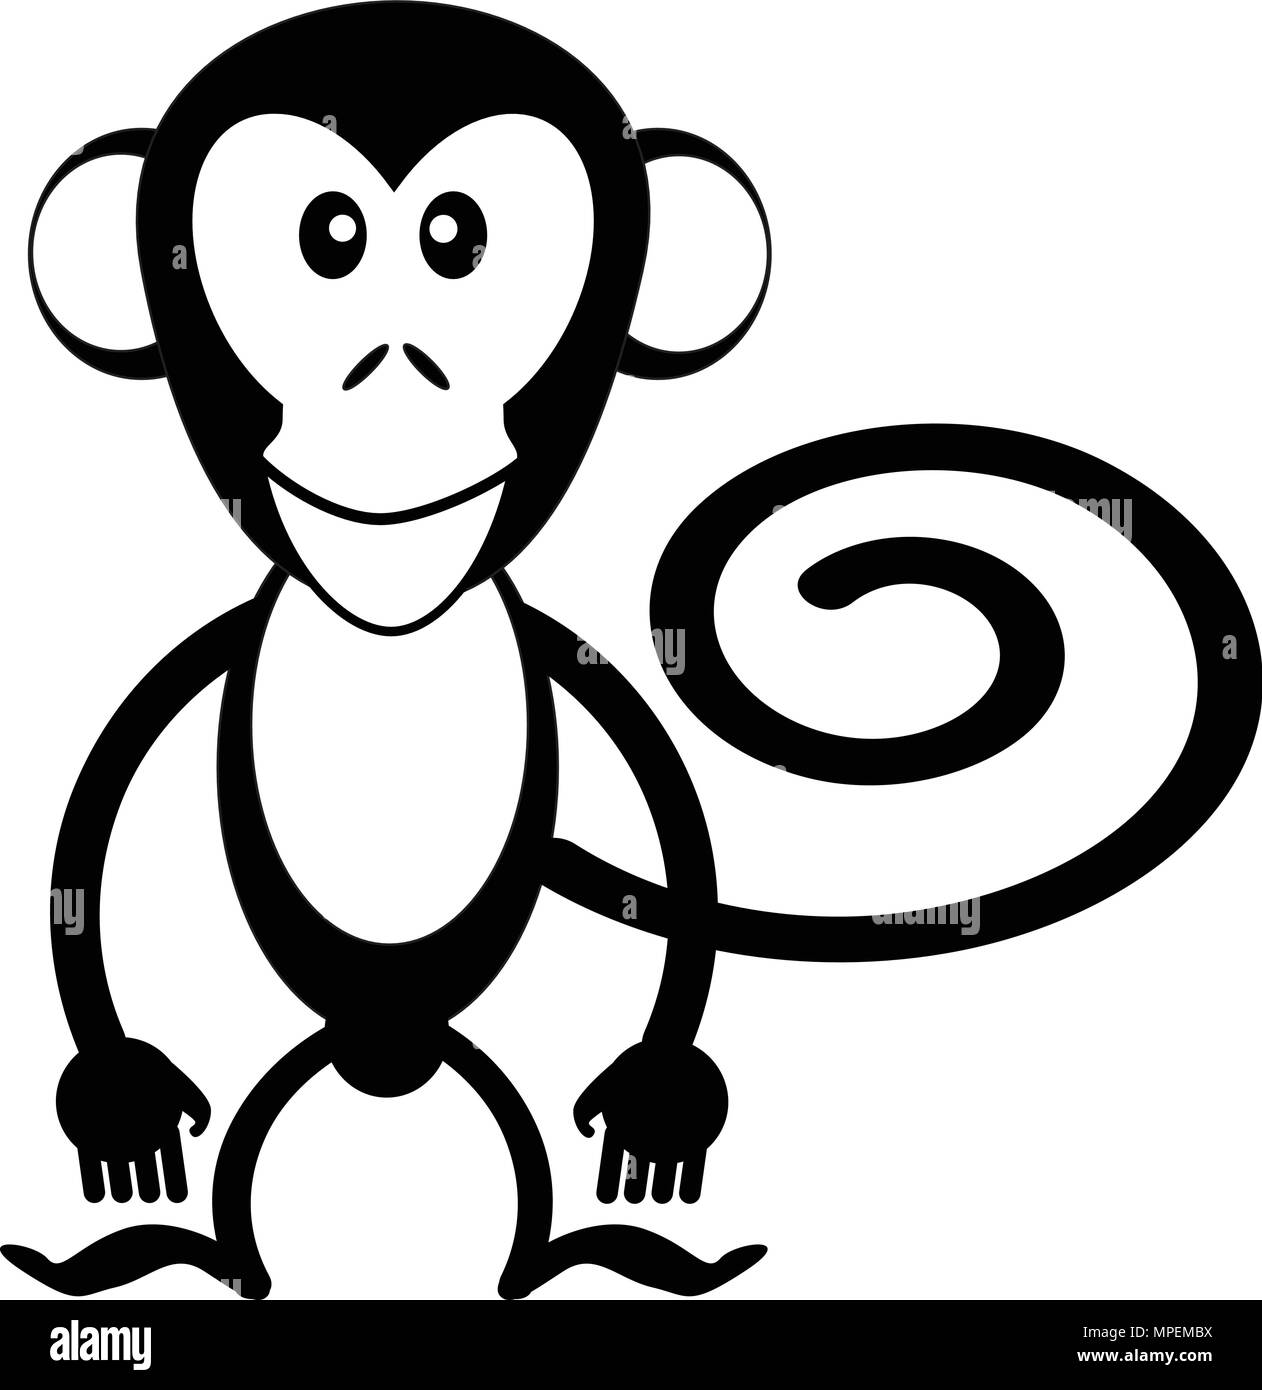 Monkey cartoon black and white vector illustration Stock Vector